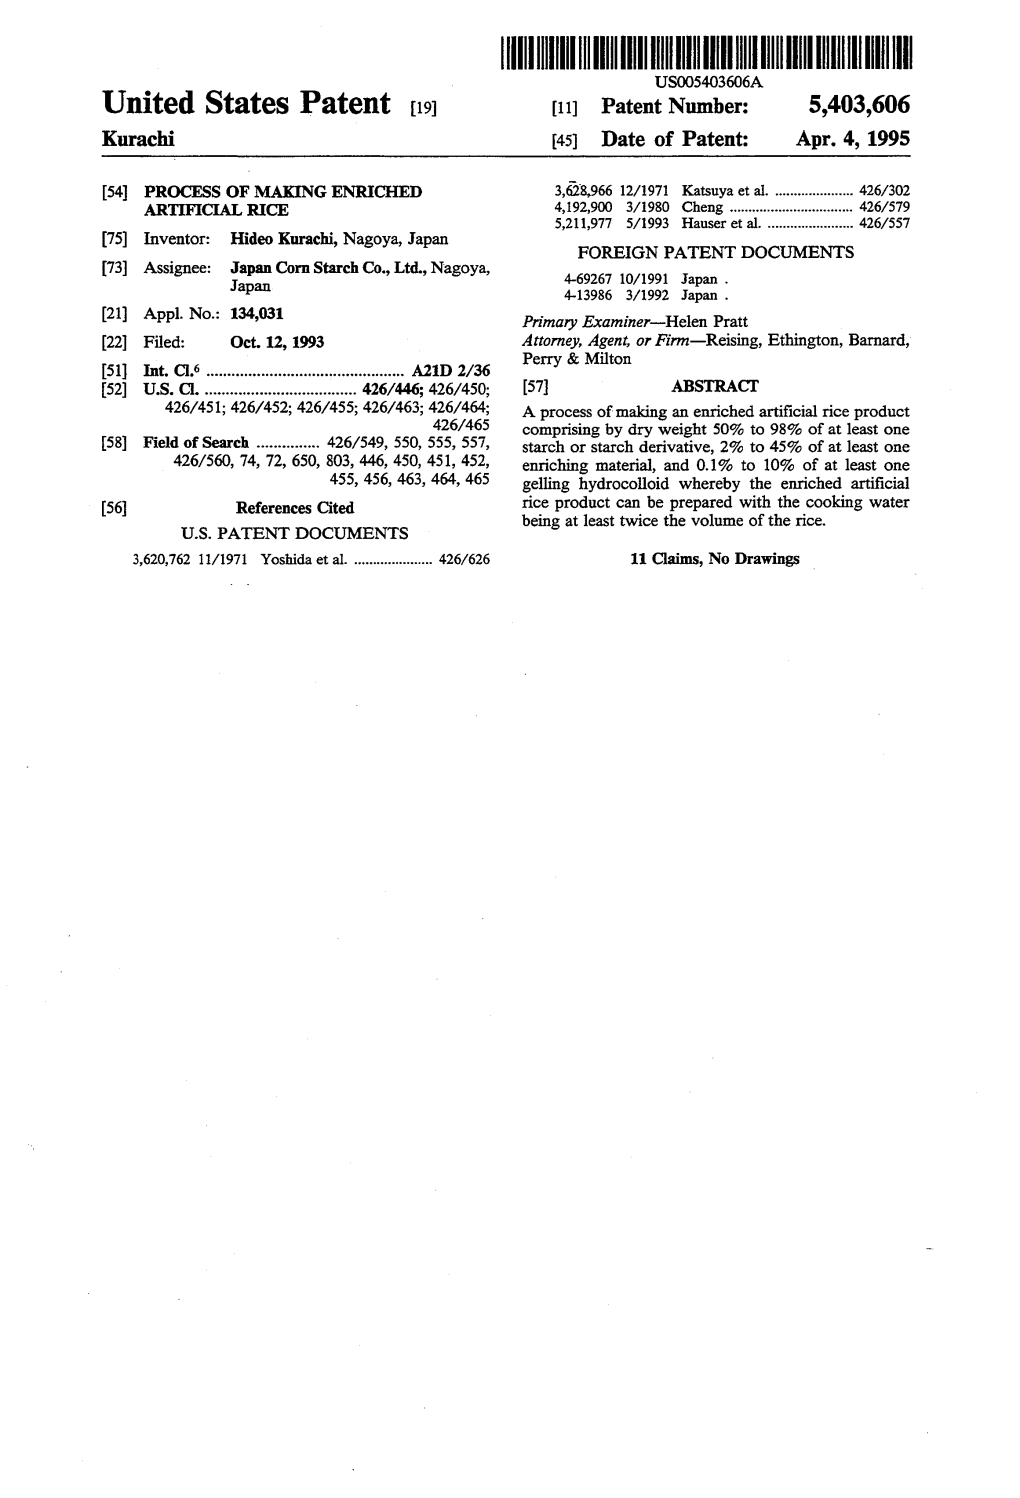 United States Patent 19 11 Patent Number: 5,403,606 Kurachi 45 Date of Patent: Apr